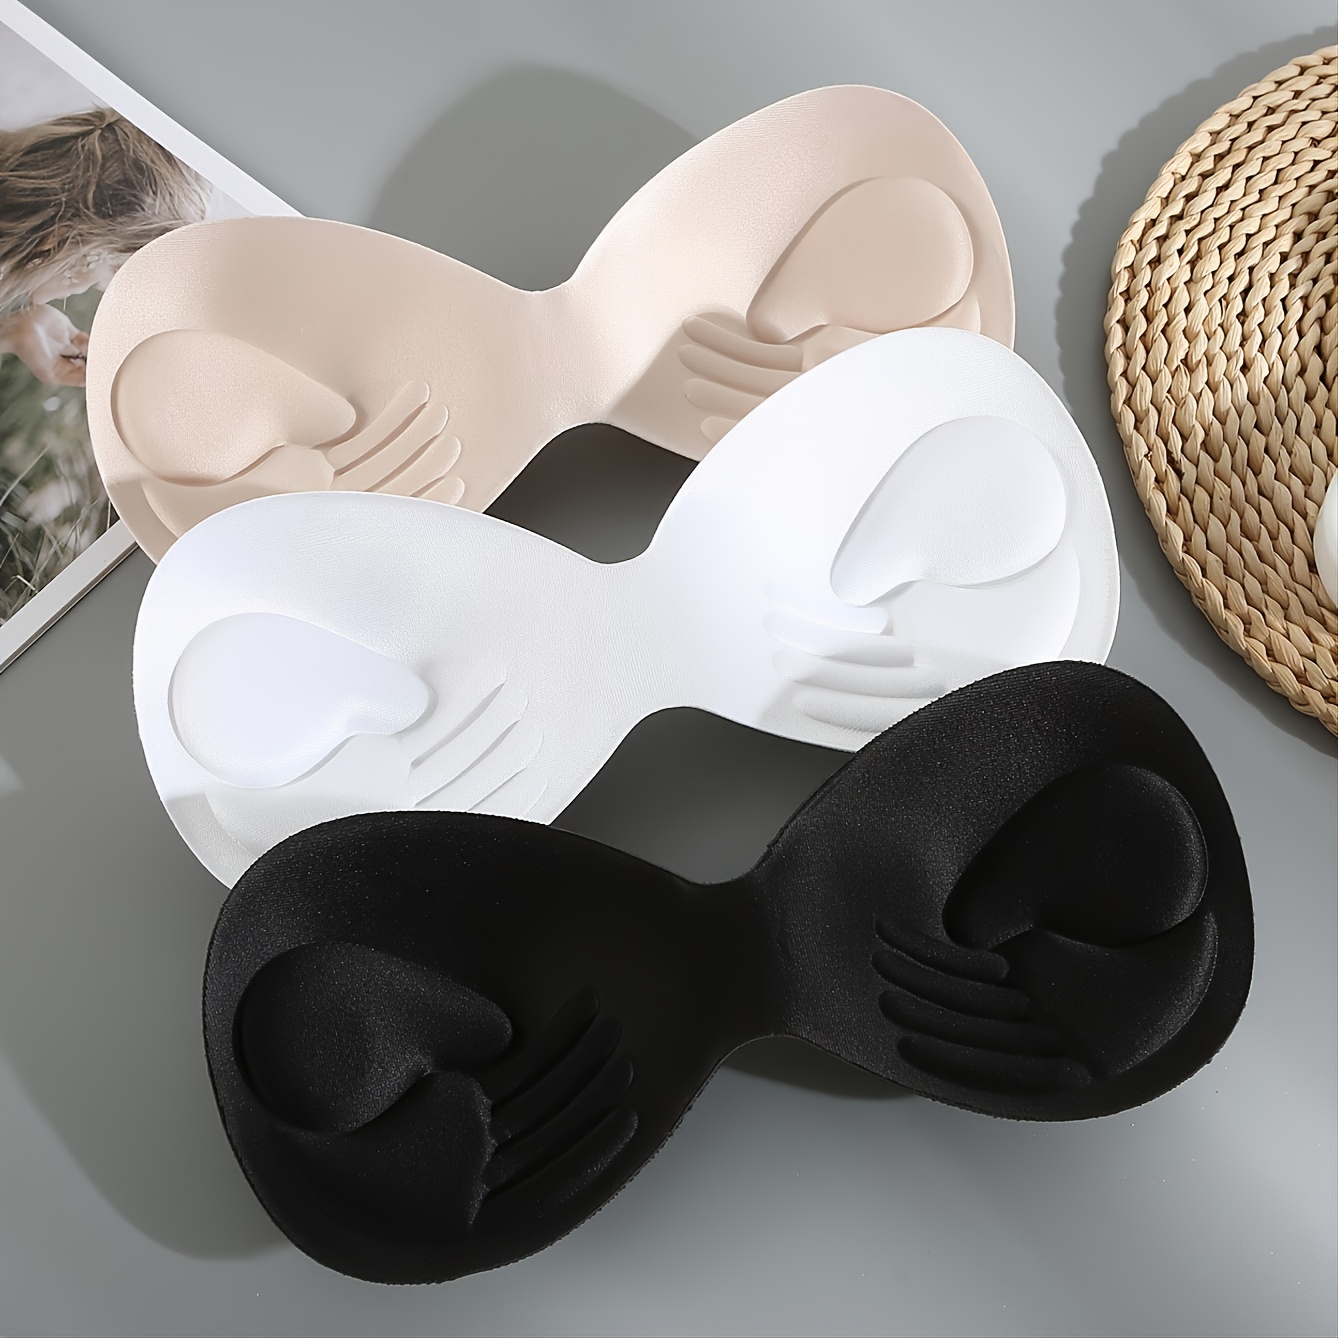 3D Removable Push Up Bra Pads Inserts Women Underwear Breast Lift  Breathable Sponge Padded Bra Pad Lining Swimsuit Bra Insert - AliExpress